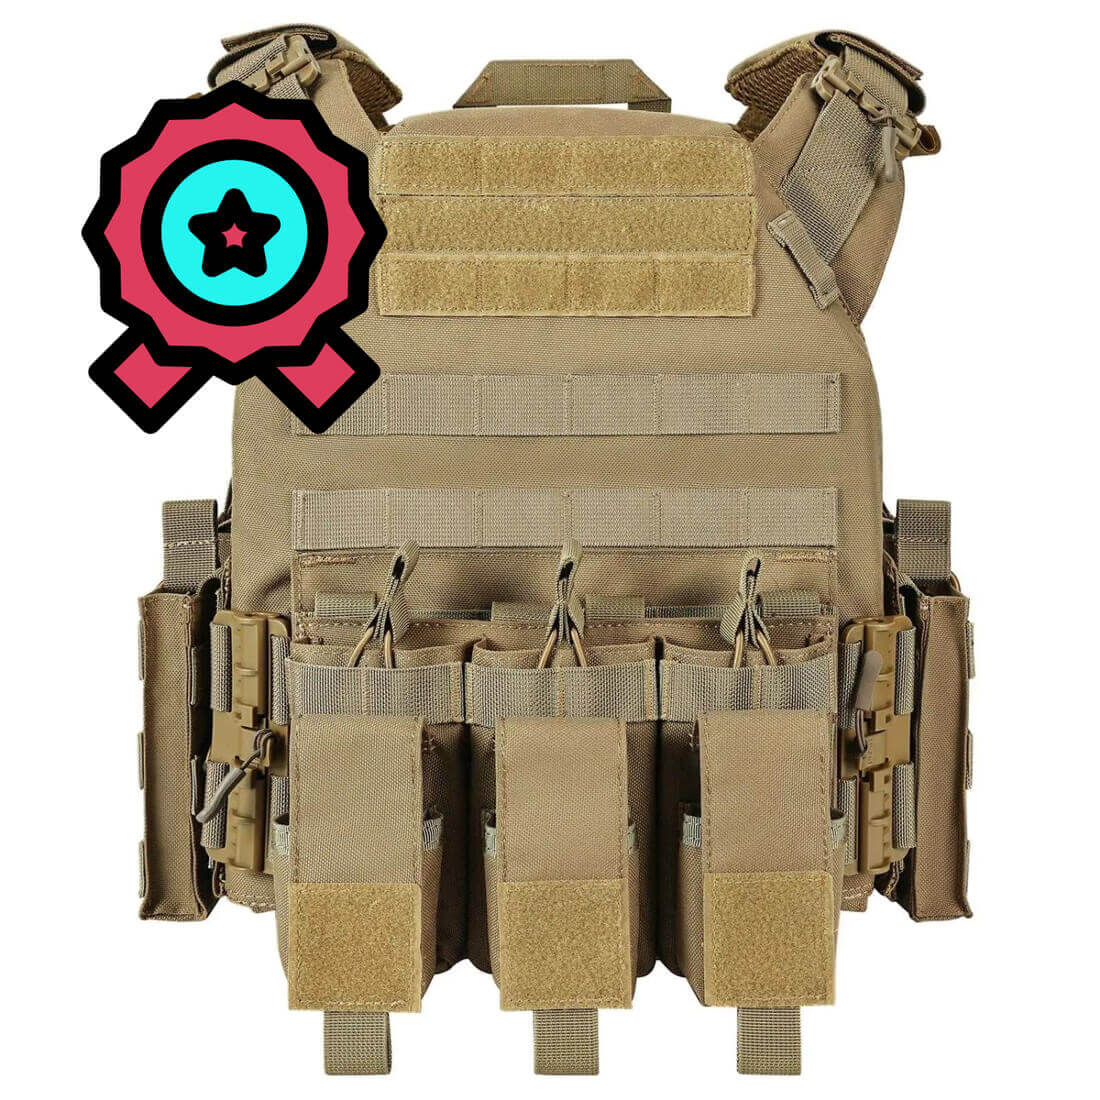 [SAME AS TIKTOK] Adjustable Tactical Vest Quick Release, 3 Colors - GloryFire GLORYFIRE®